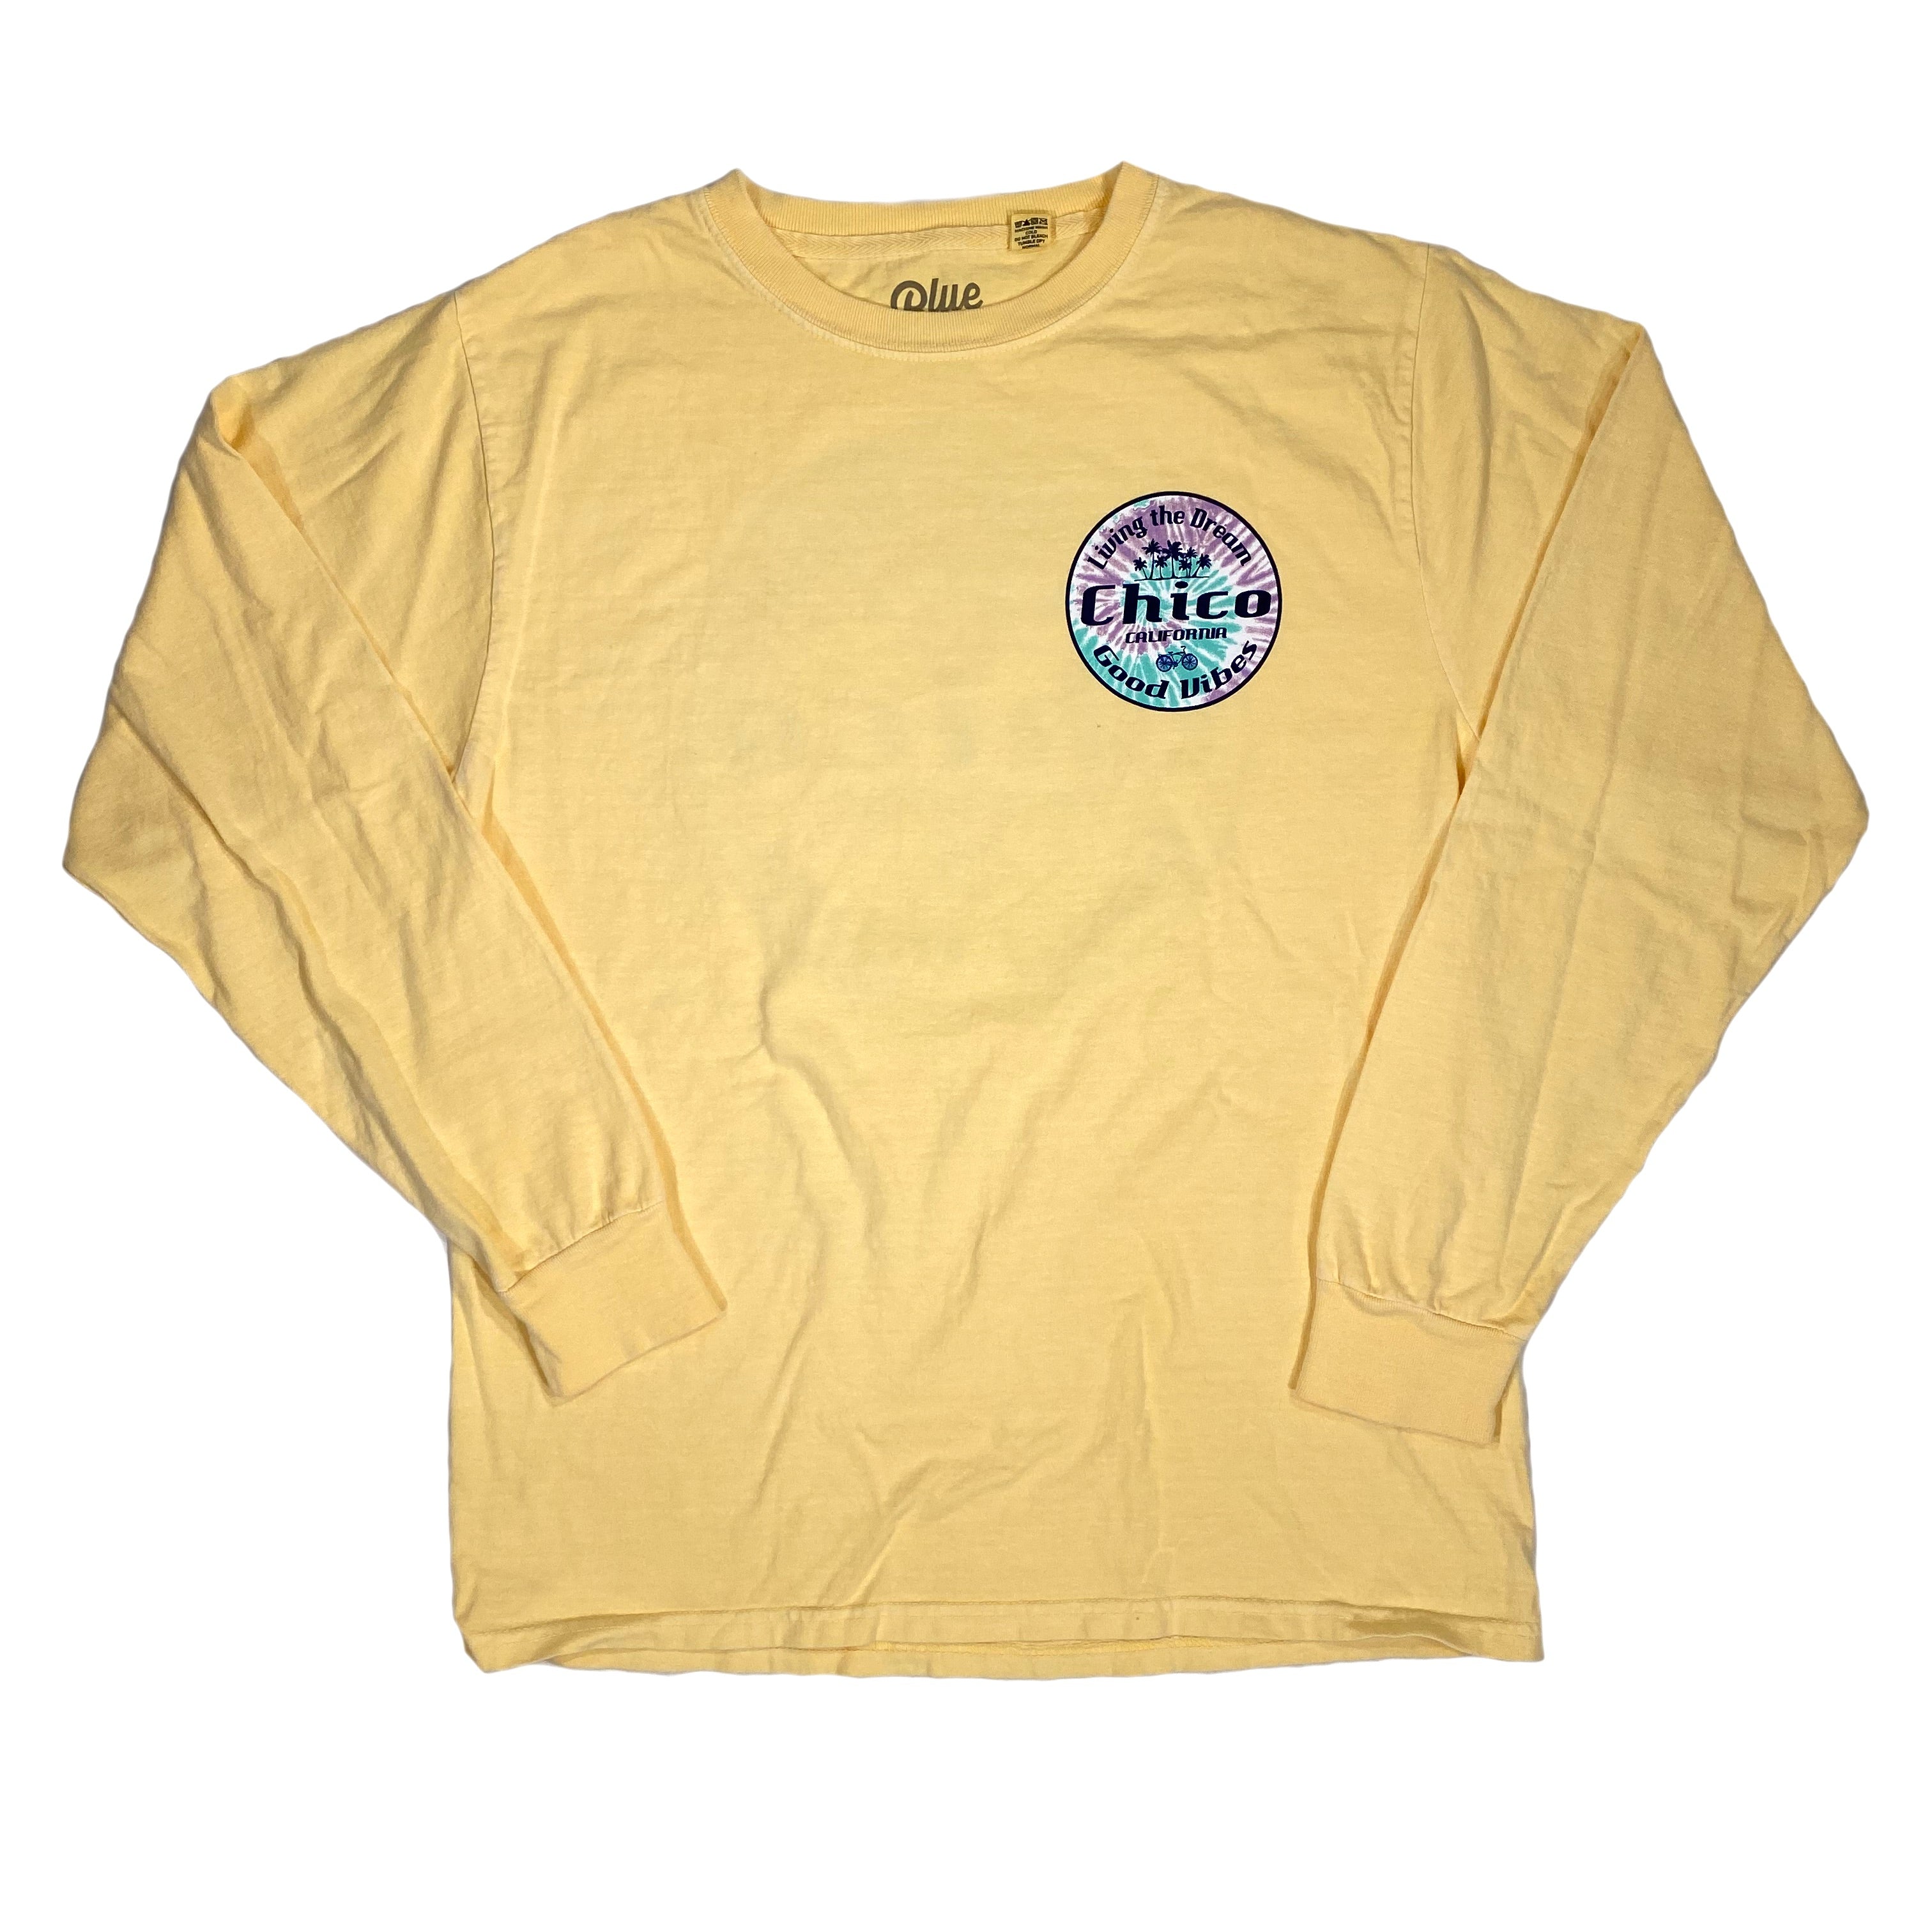 Halogen Mint Swirl - Long Sleeve Chico T-Shirt    